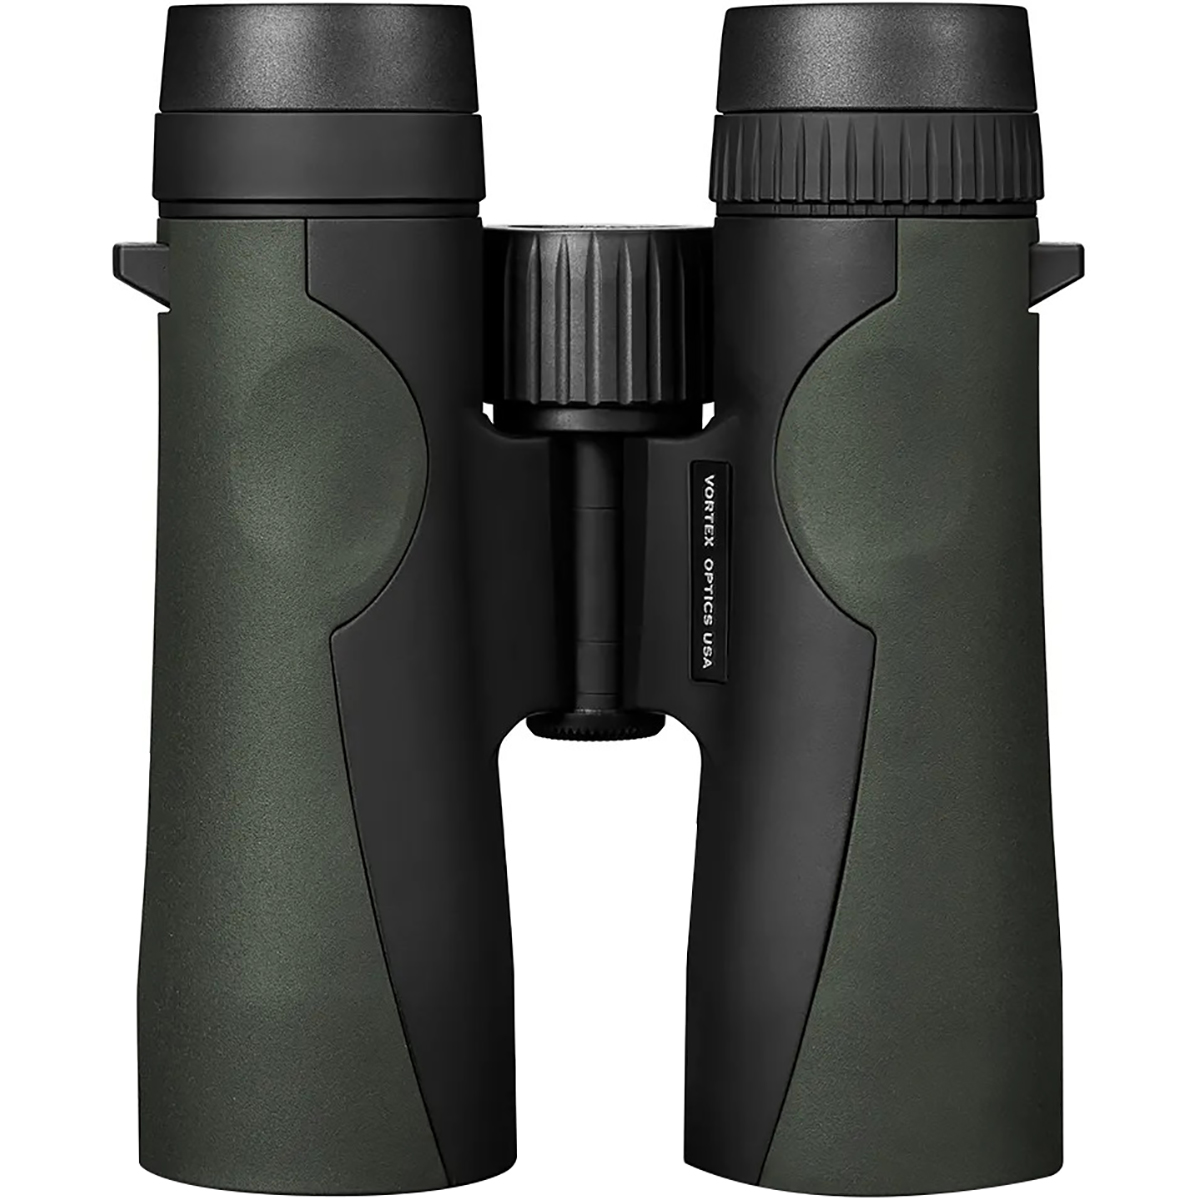 Vortex Optics Crossfire HD 10x42 Binoculars